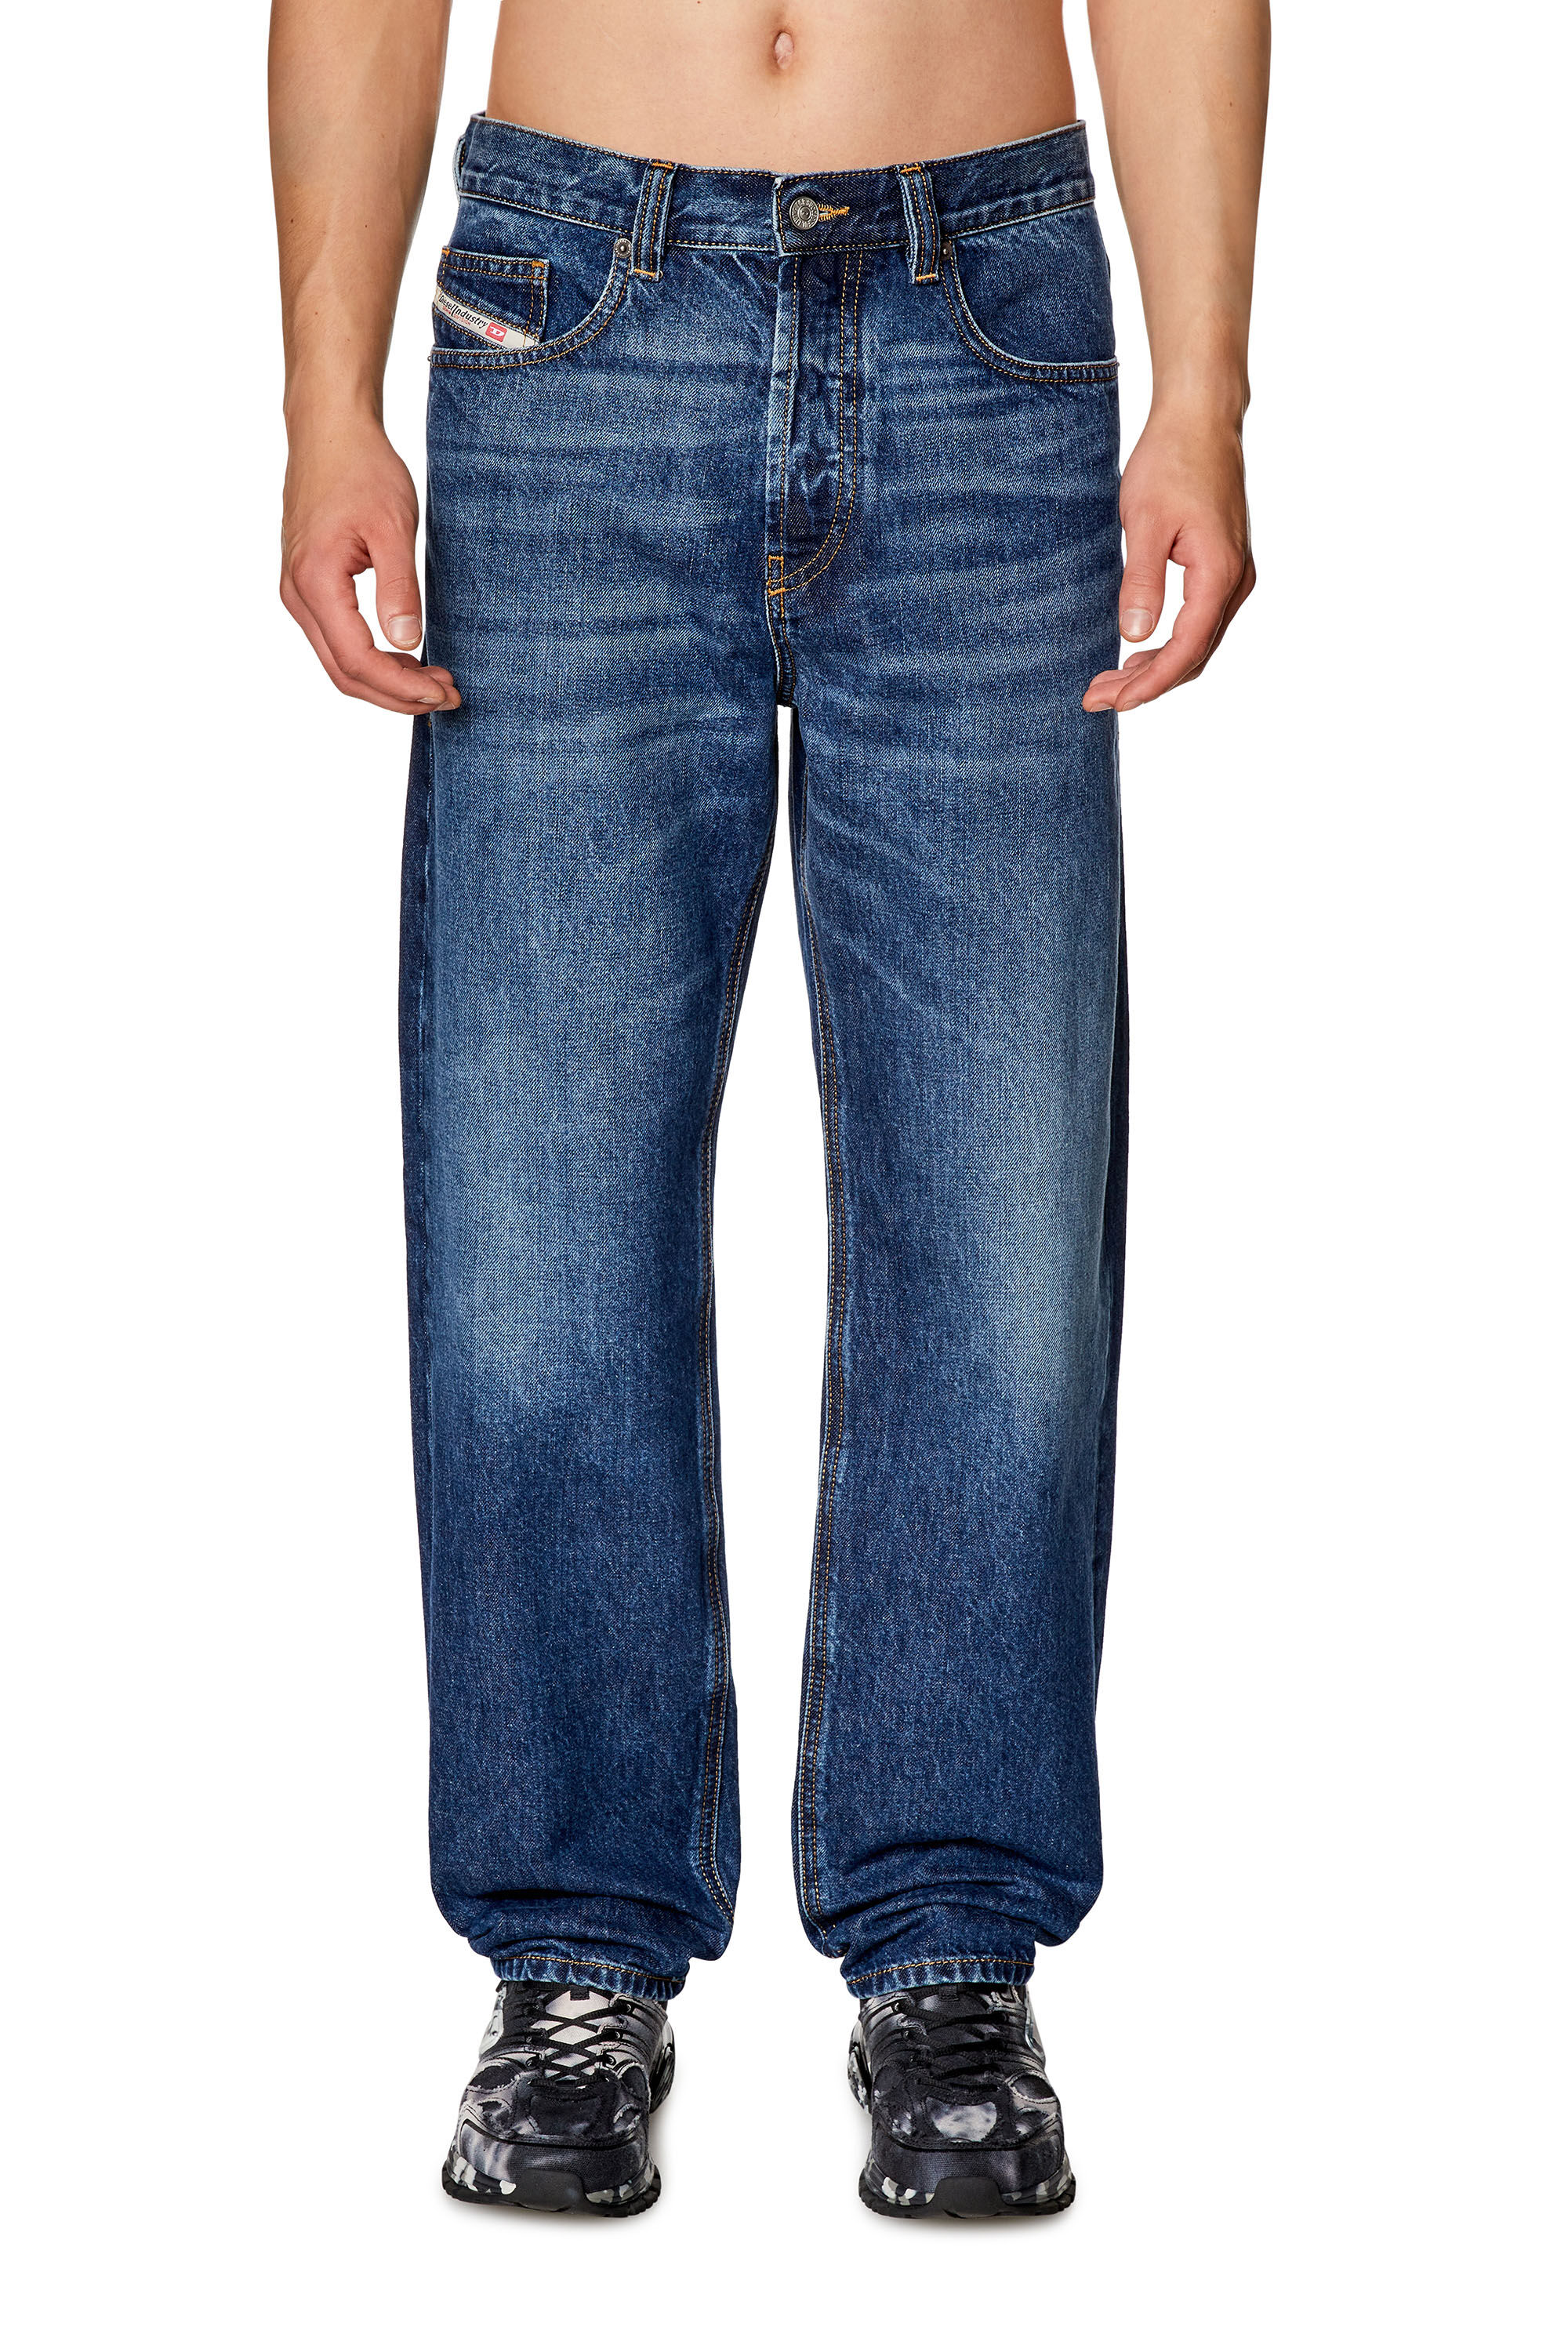 Men's Straight Jeans | Dark blue | Diesel 2010 D-Macs